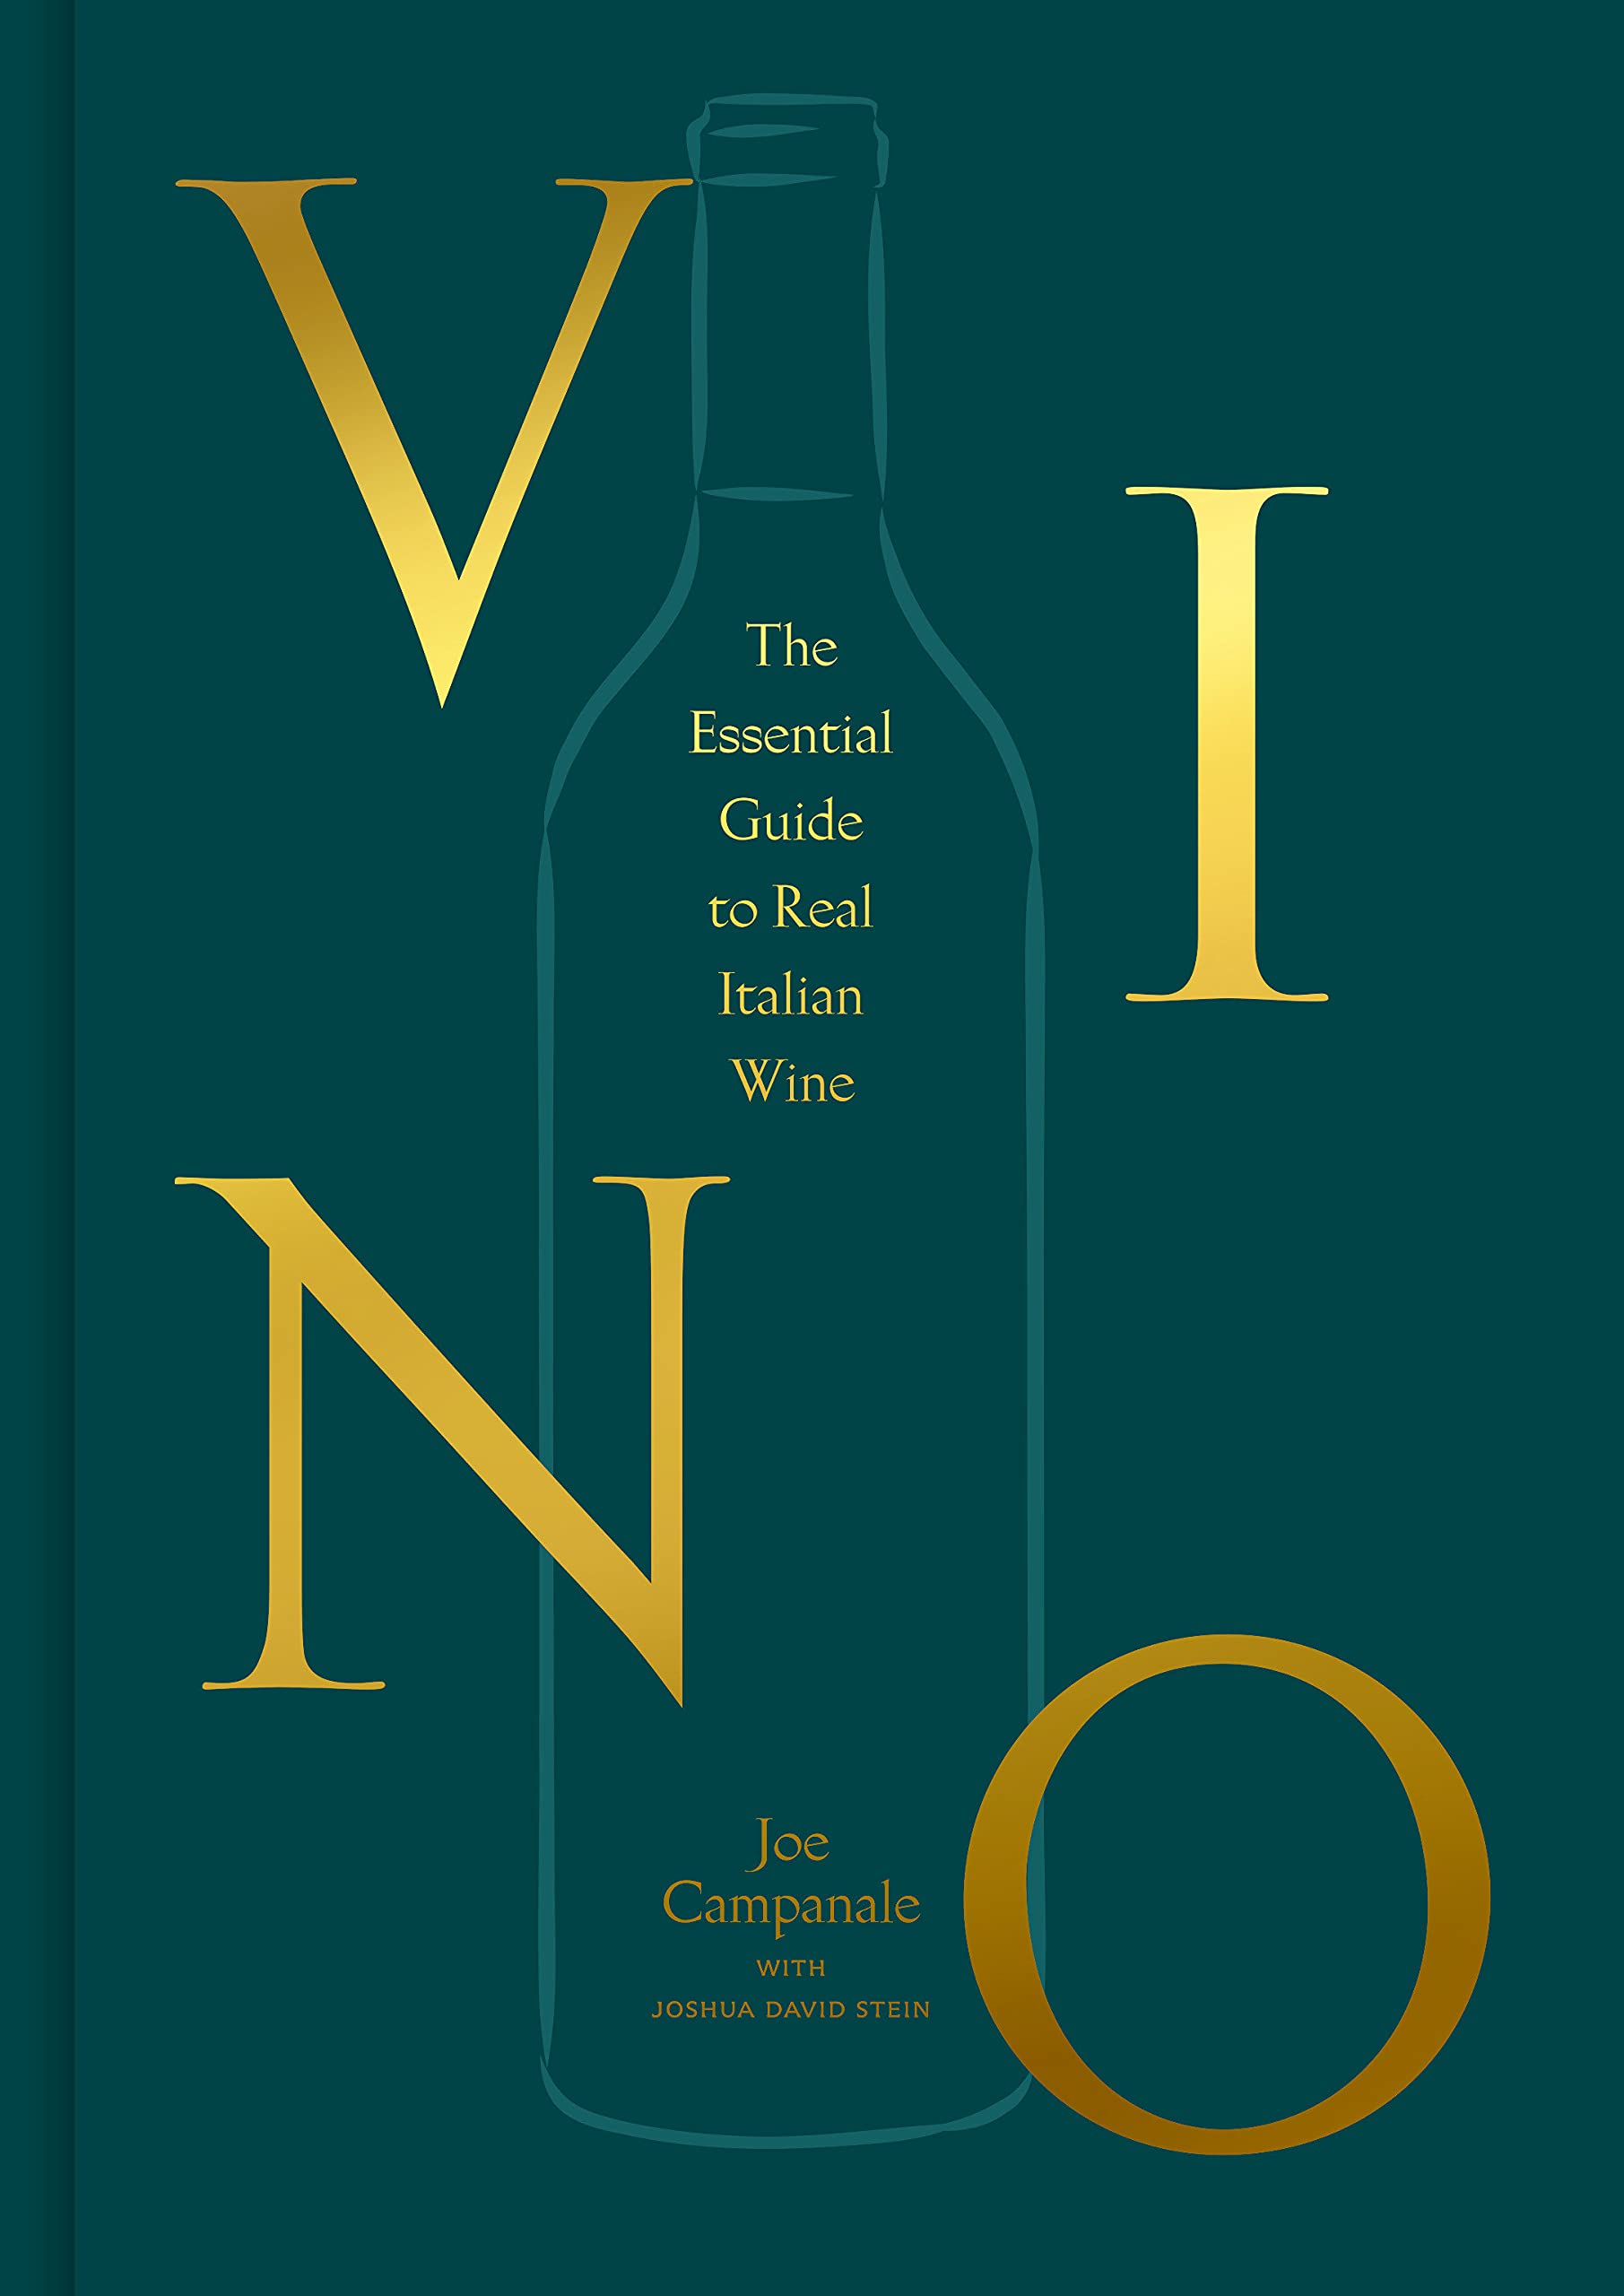 Vino: The Essential Guide to Real Italian Wine (Joe Campanale, Joshua David Stein)